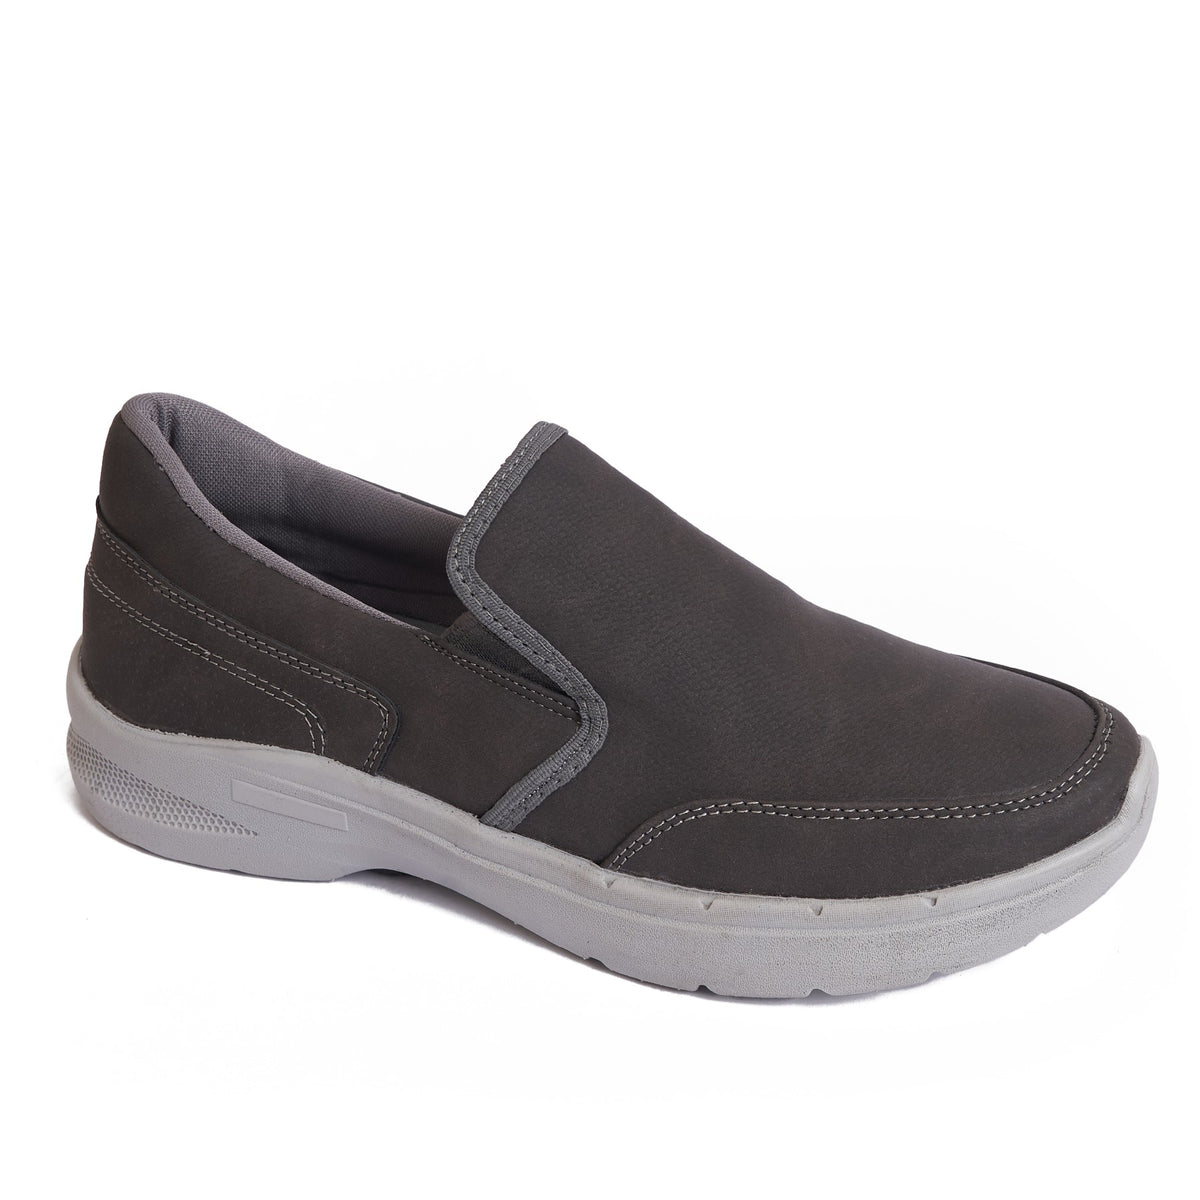 Koka Men's Skechers Slip-ins - Stylish Gray Shoes with Foam Comfort Sole